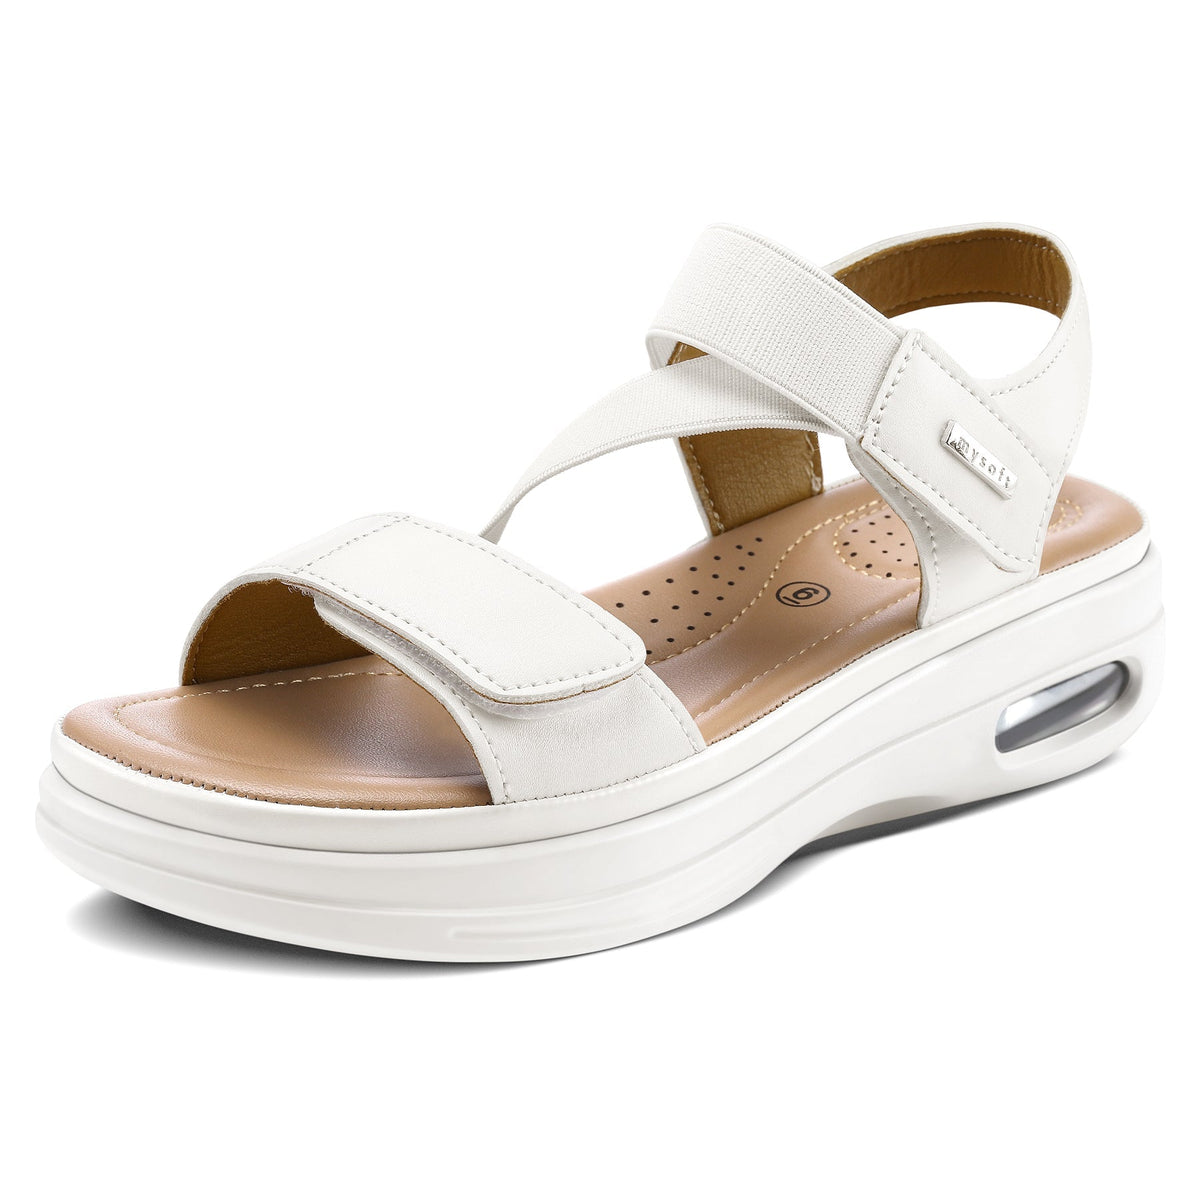 Summer Light Fashion Comfortable Sandals